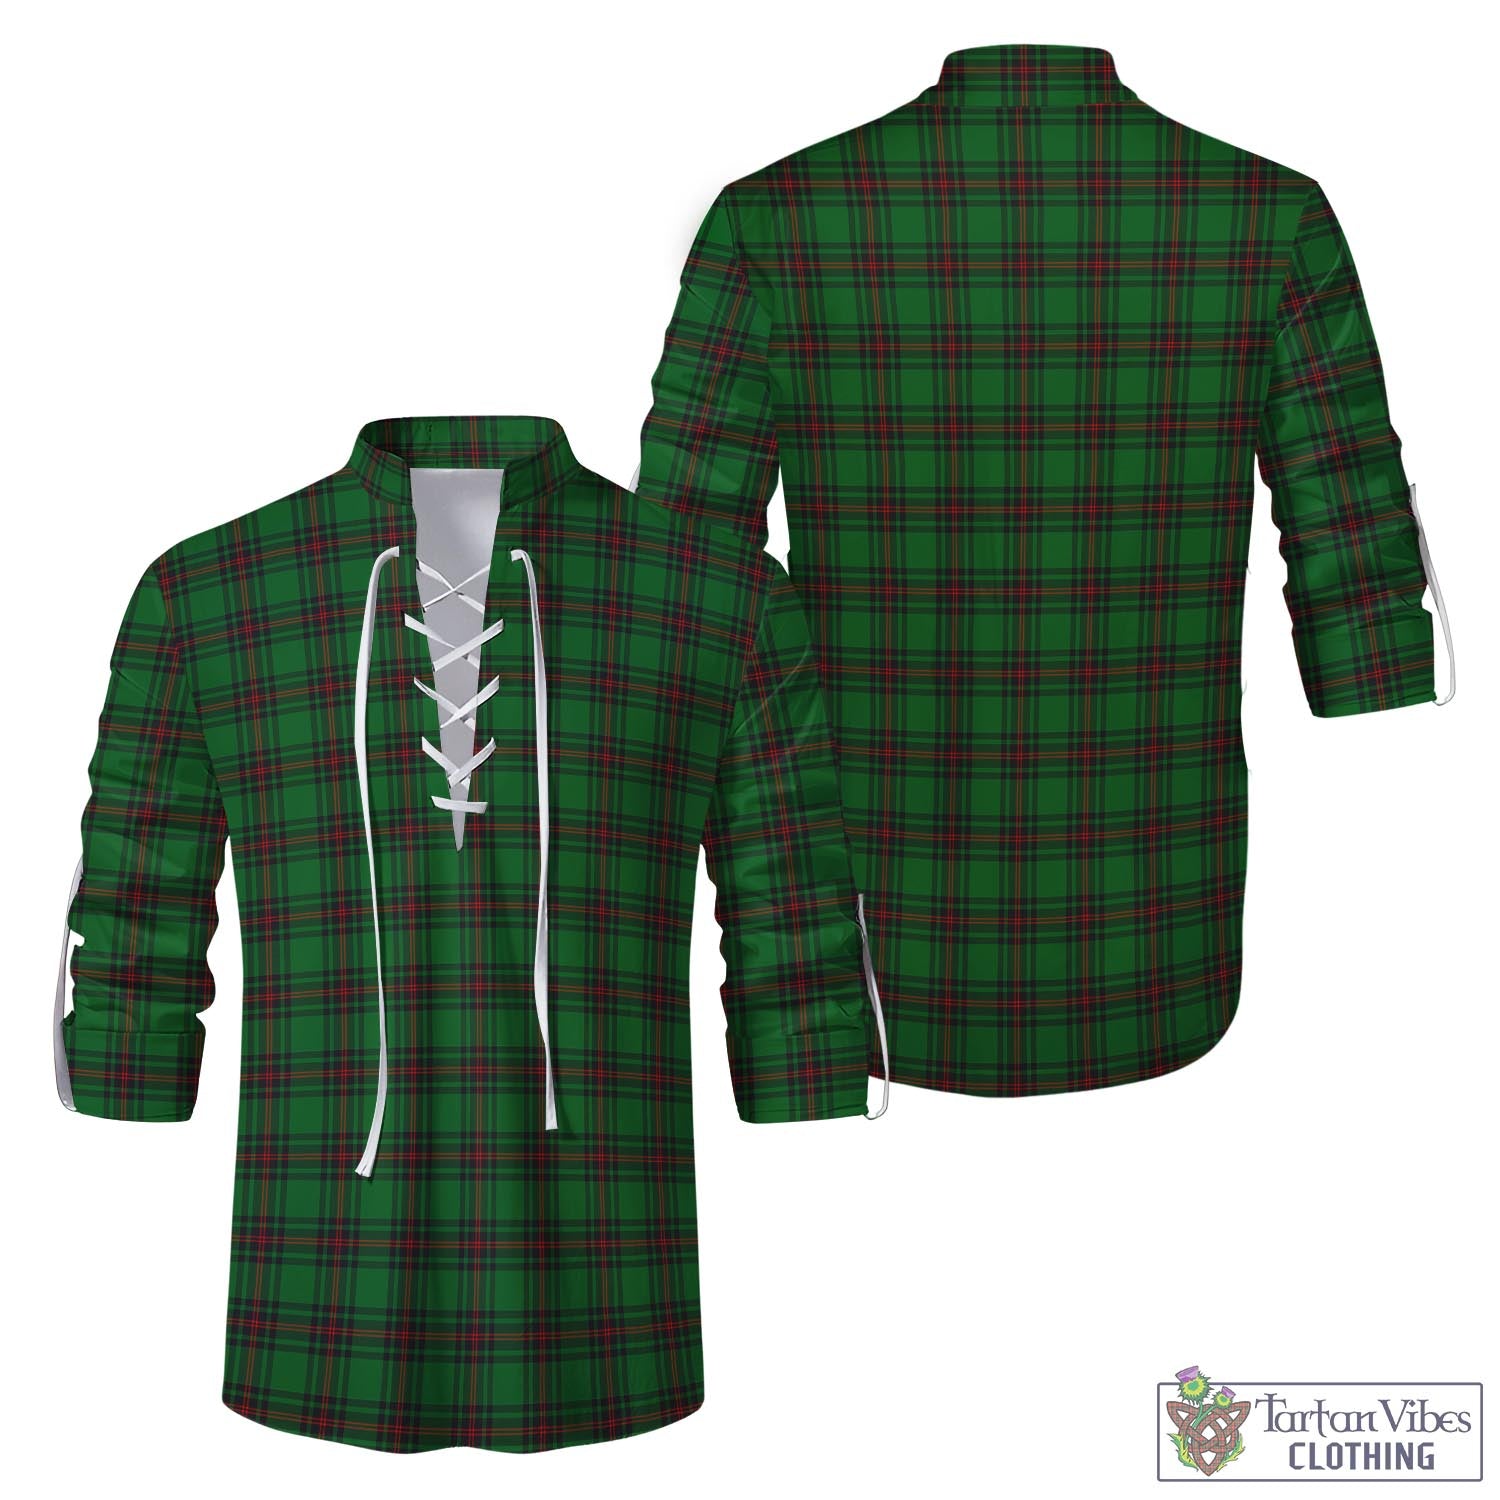 Tartan Vibes Clothing Anstruther Tartan Men's Scottish Traditional Jacobite Ghillie Kilt Shirt